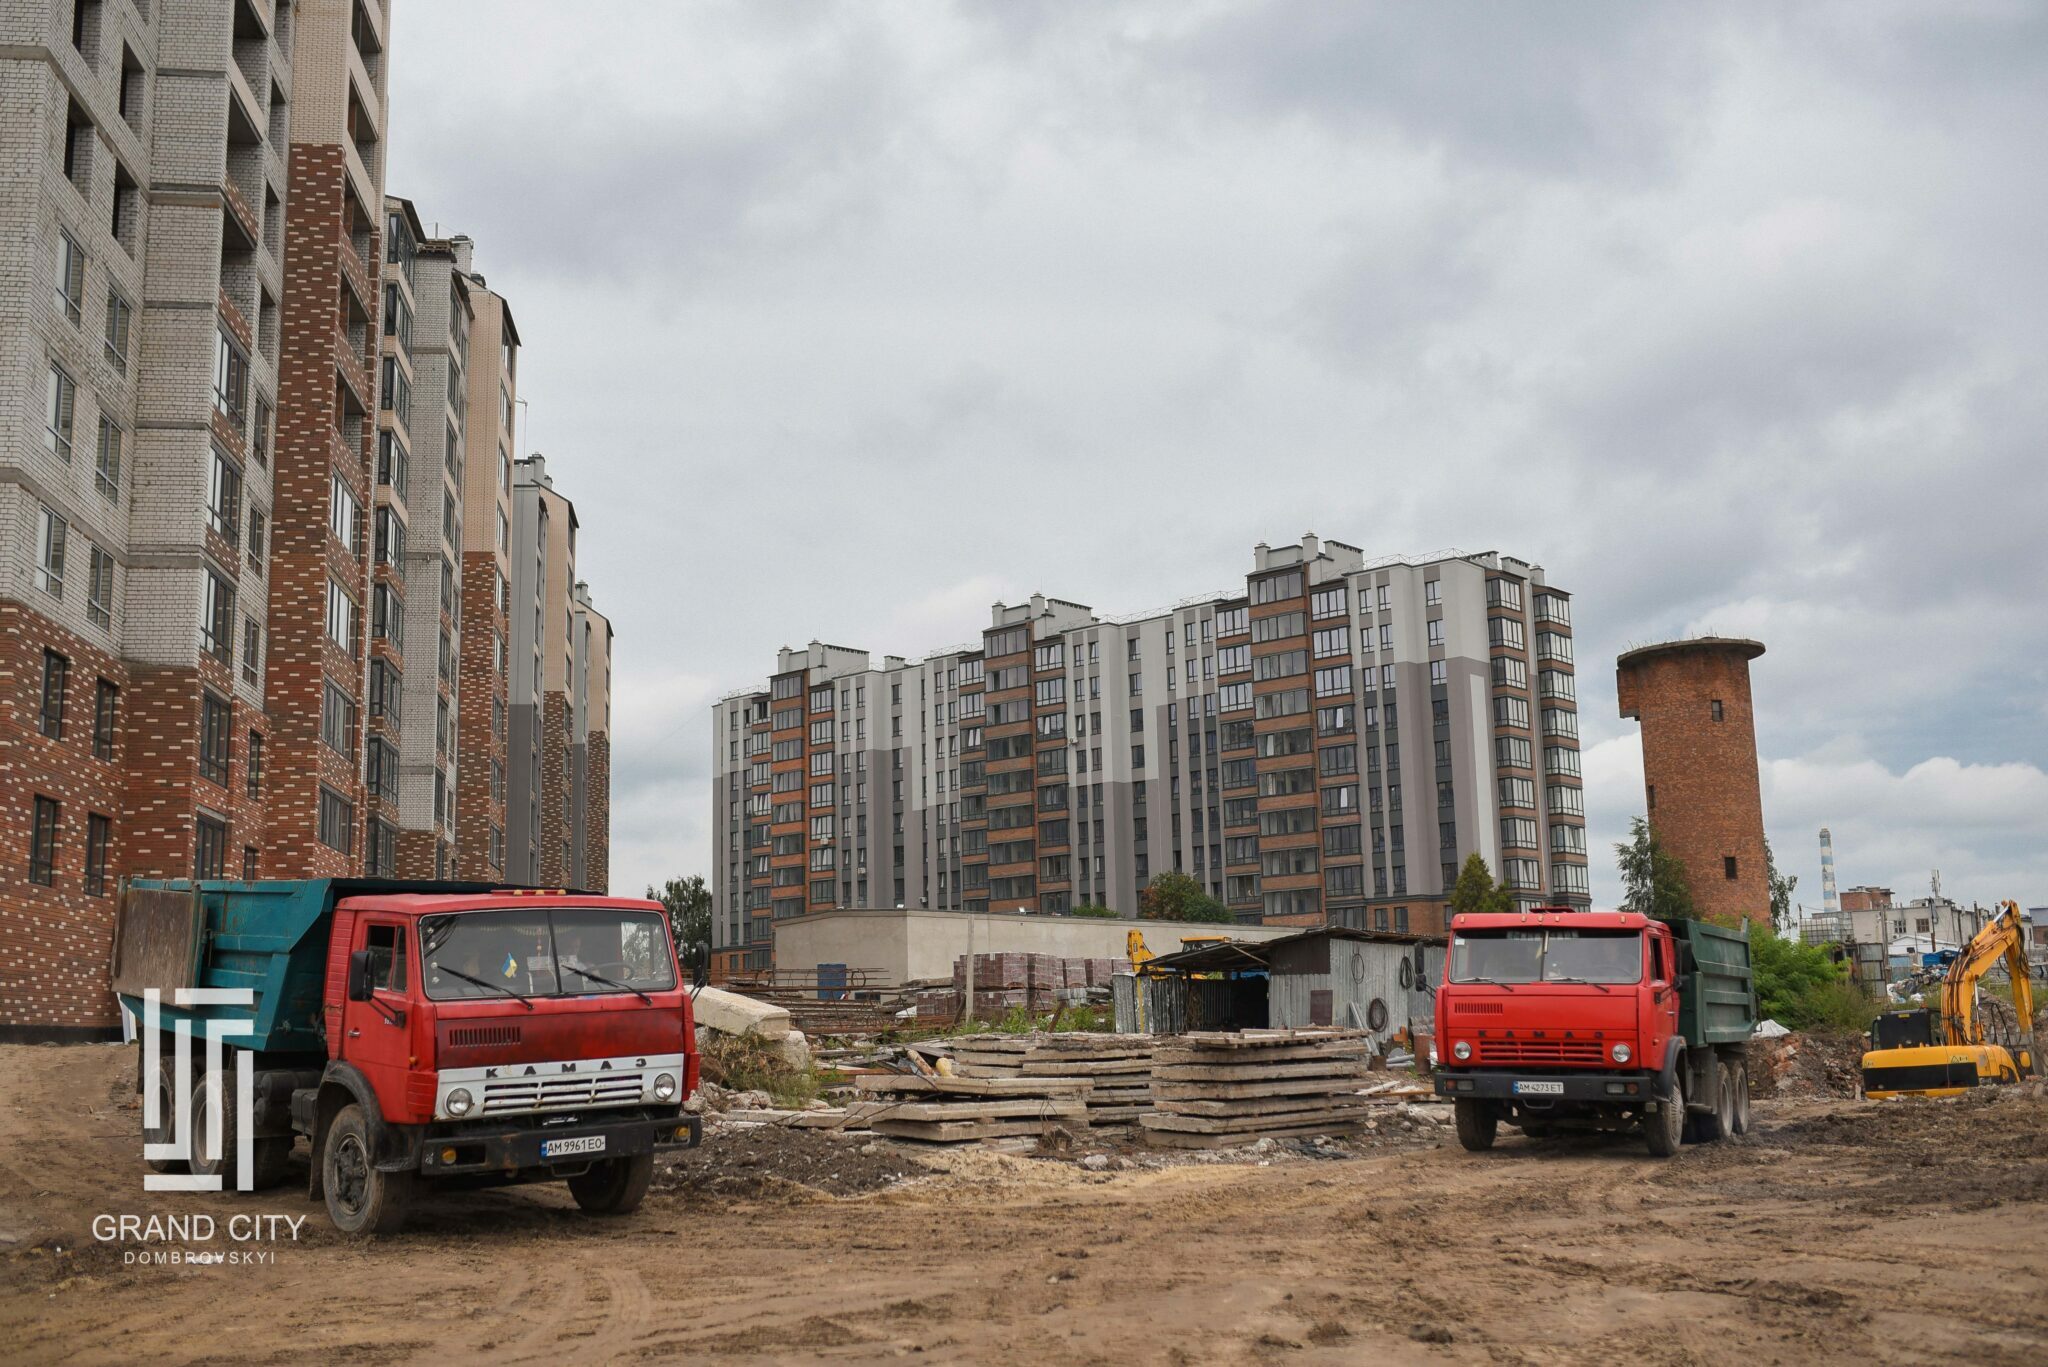 Ход строительства ЖК Grand City Dombrovskyi, авг, 2021 год